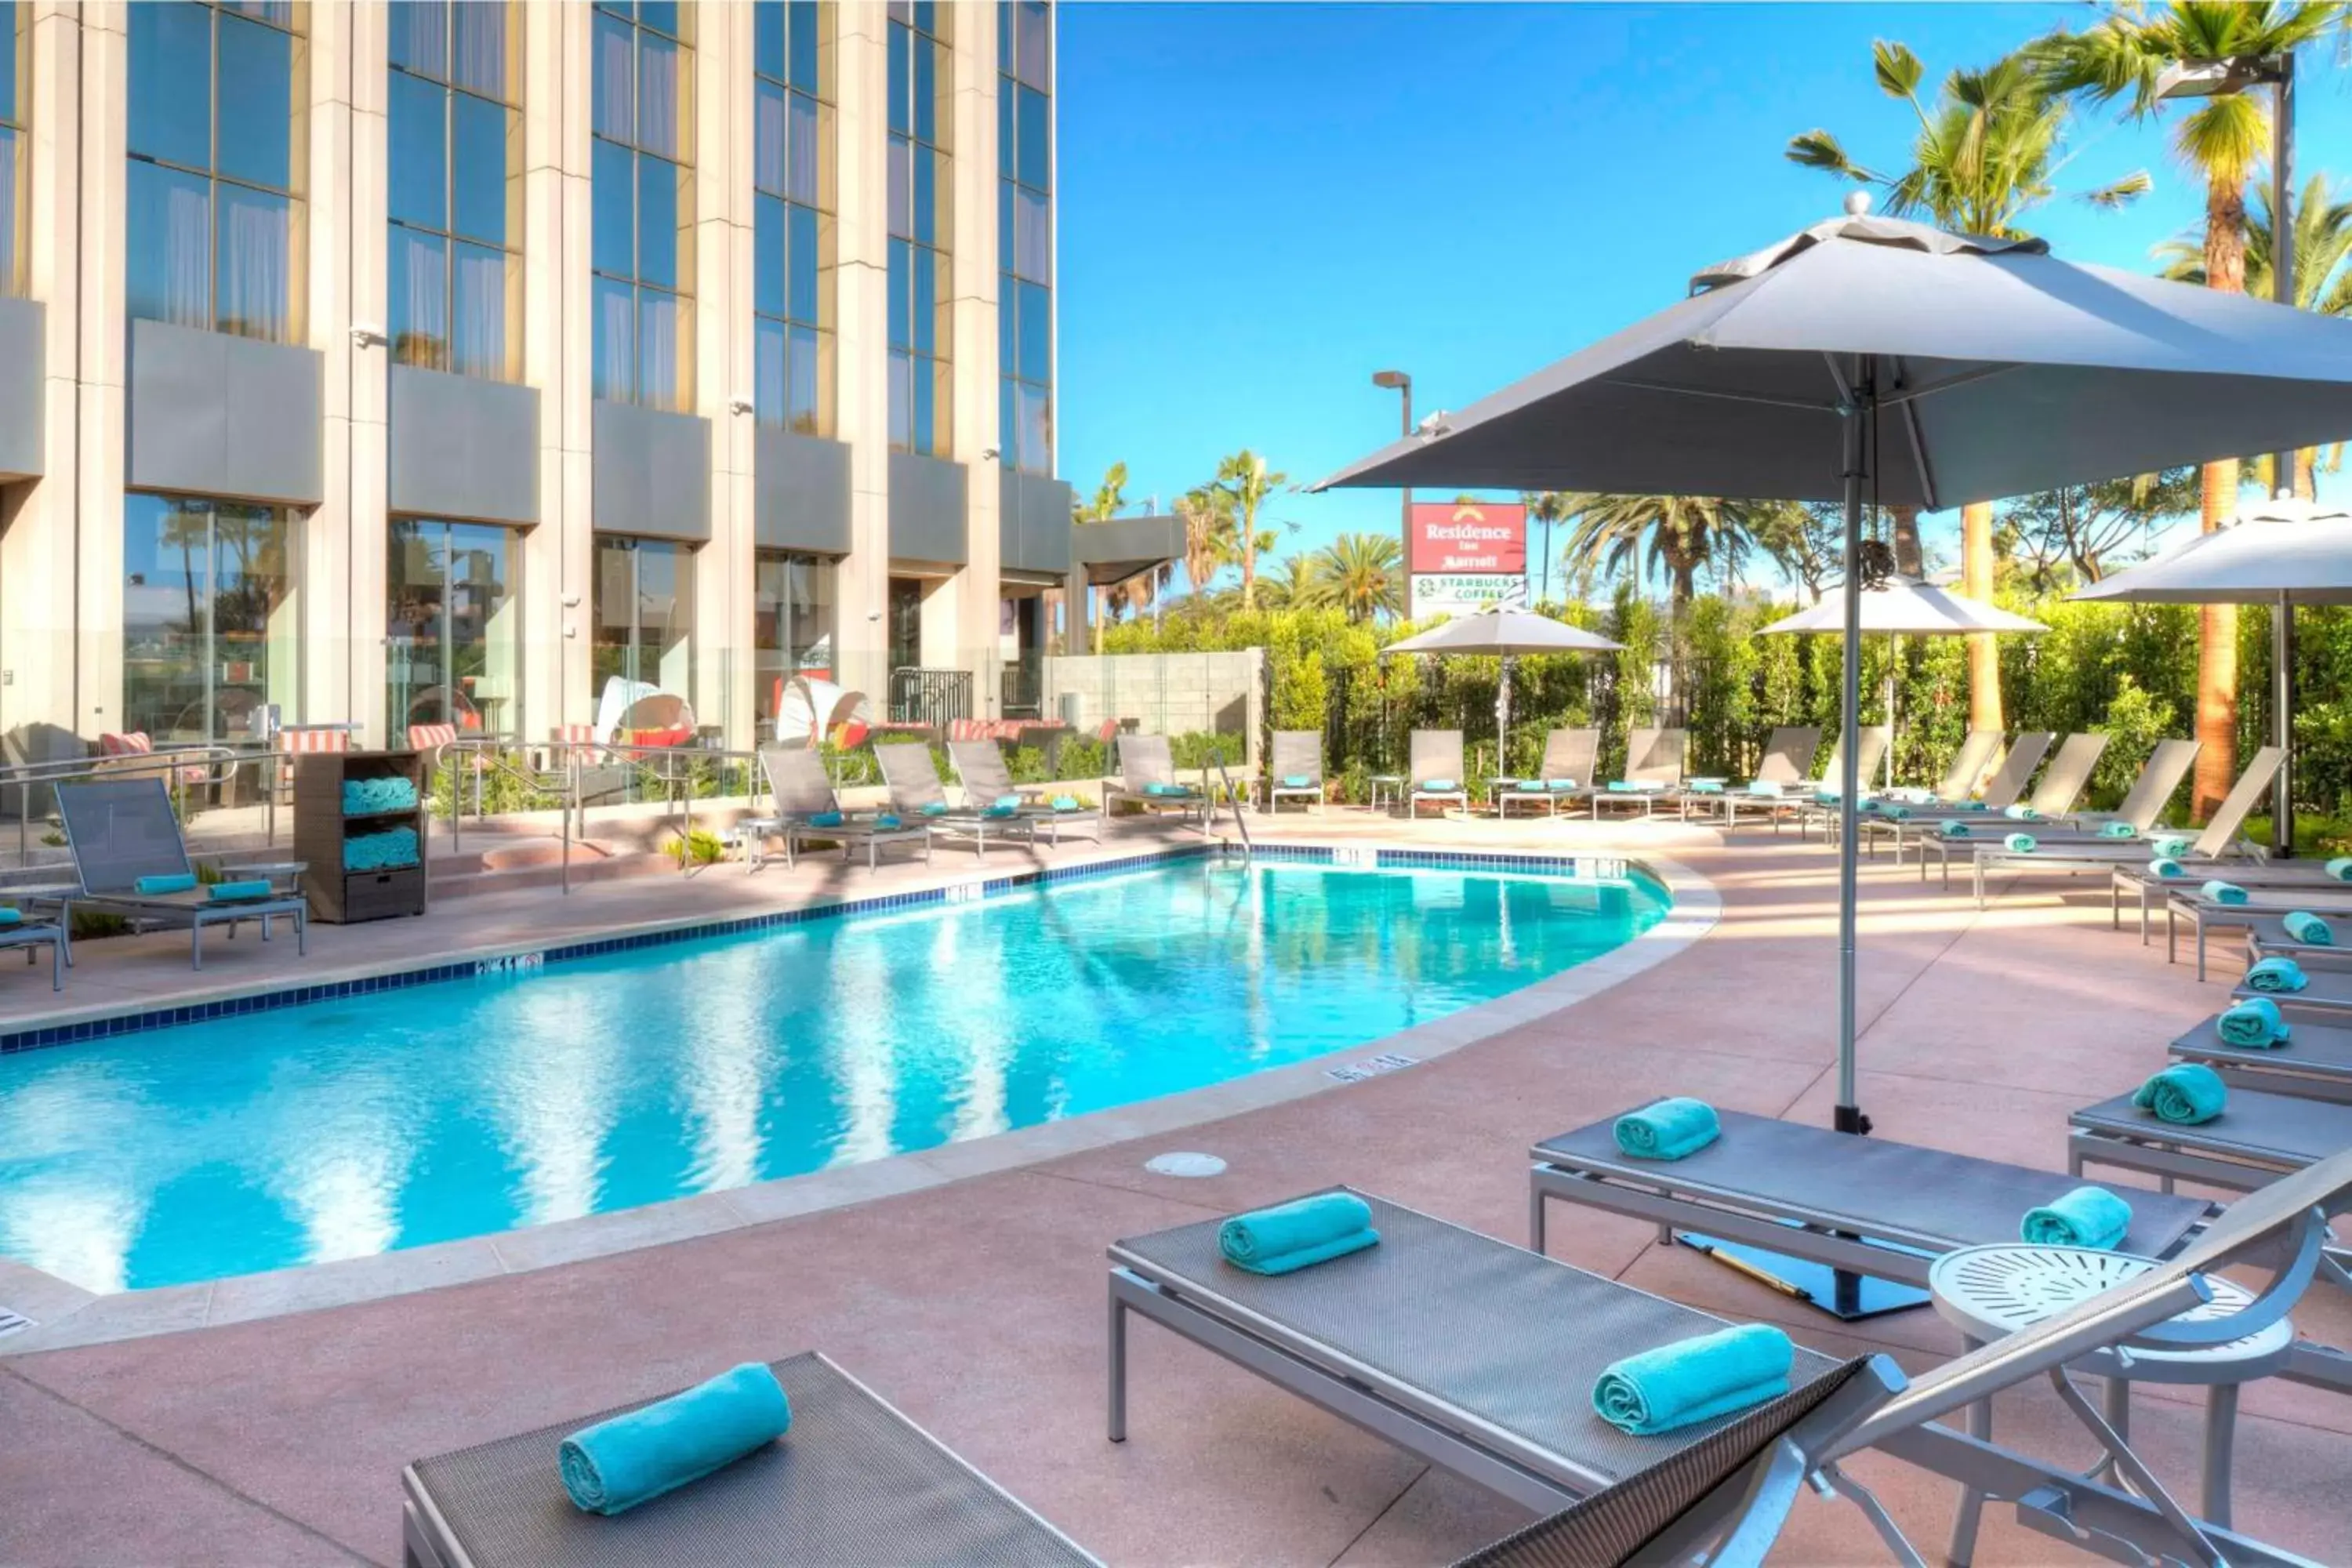 Swimming Pool in Residence Inn by Marriott Los Angeles LAX/Century Boulevard